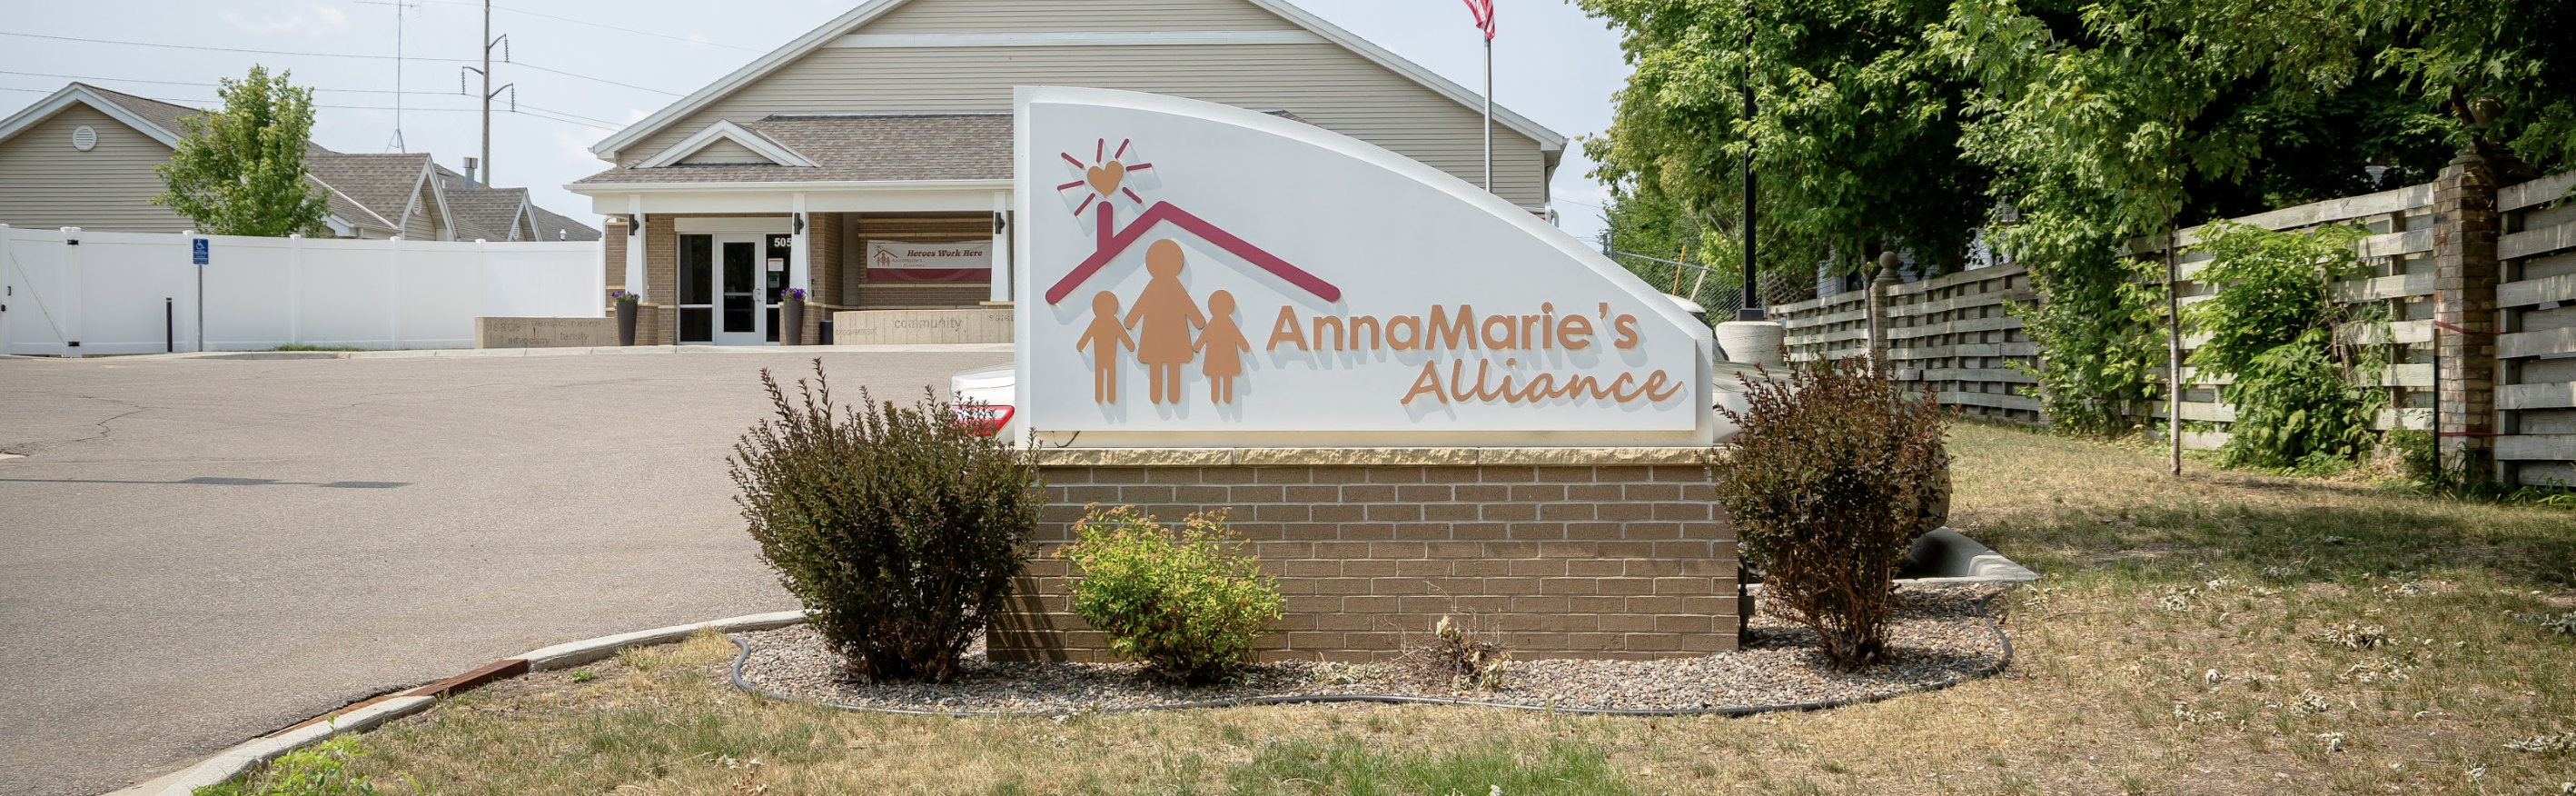 Anna Marie's Alliance, St. Cloud MN